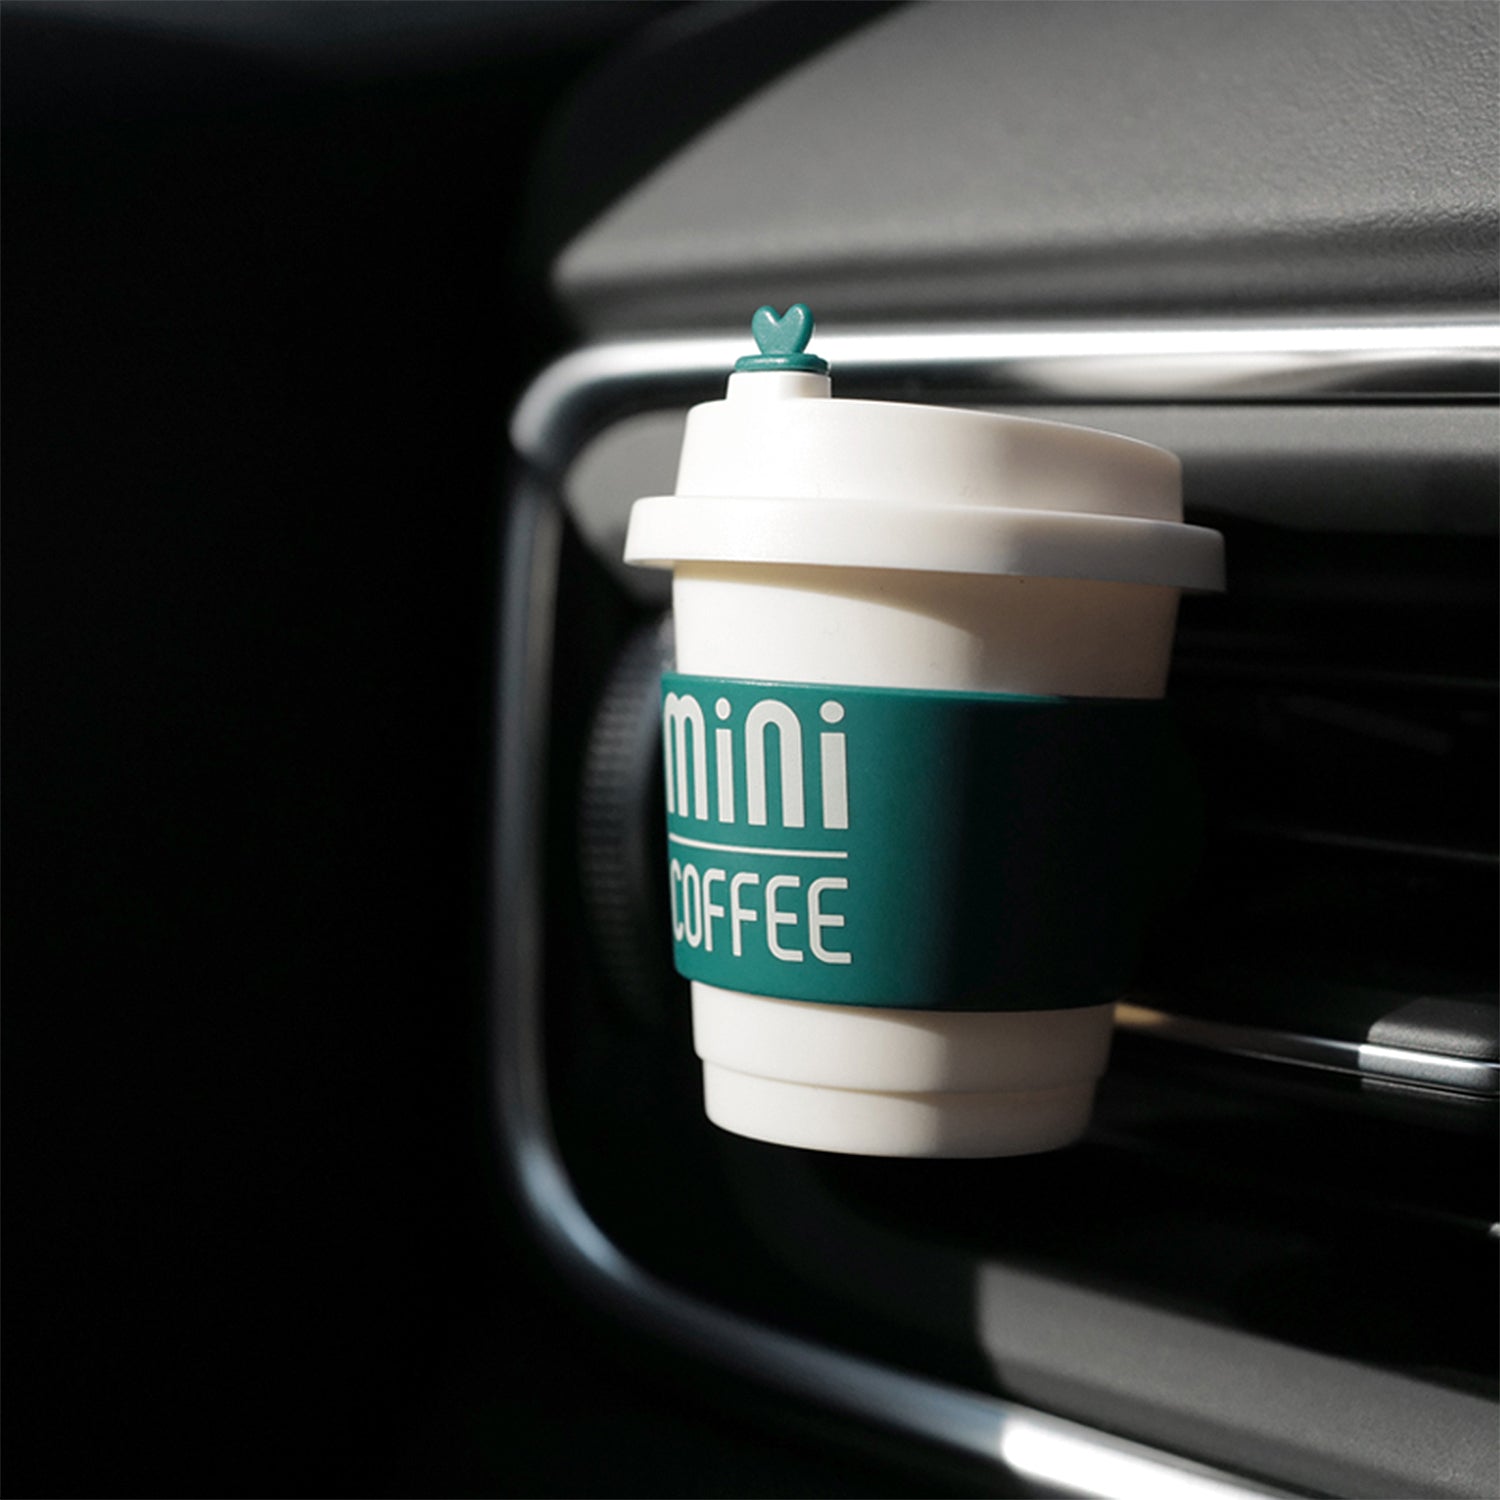 bbdd Mini Cafe Car Air Freshener, Cute Car Interior Decoration, Creative Coffee Cup Car Aromatherapy / bbdd Mini Cafe Car Air Freshener Refill